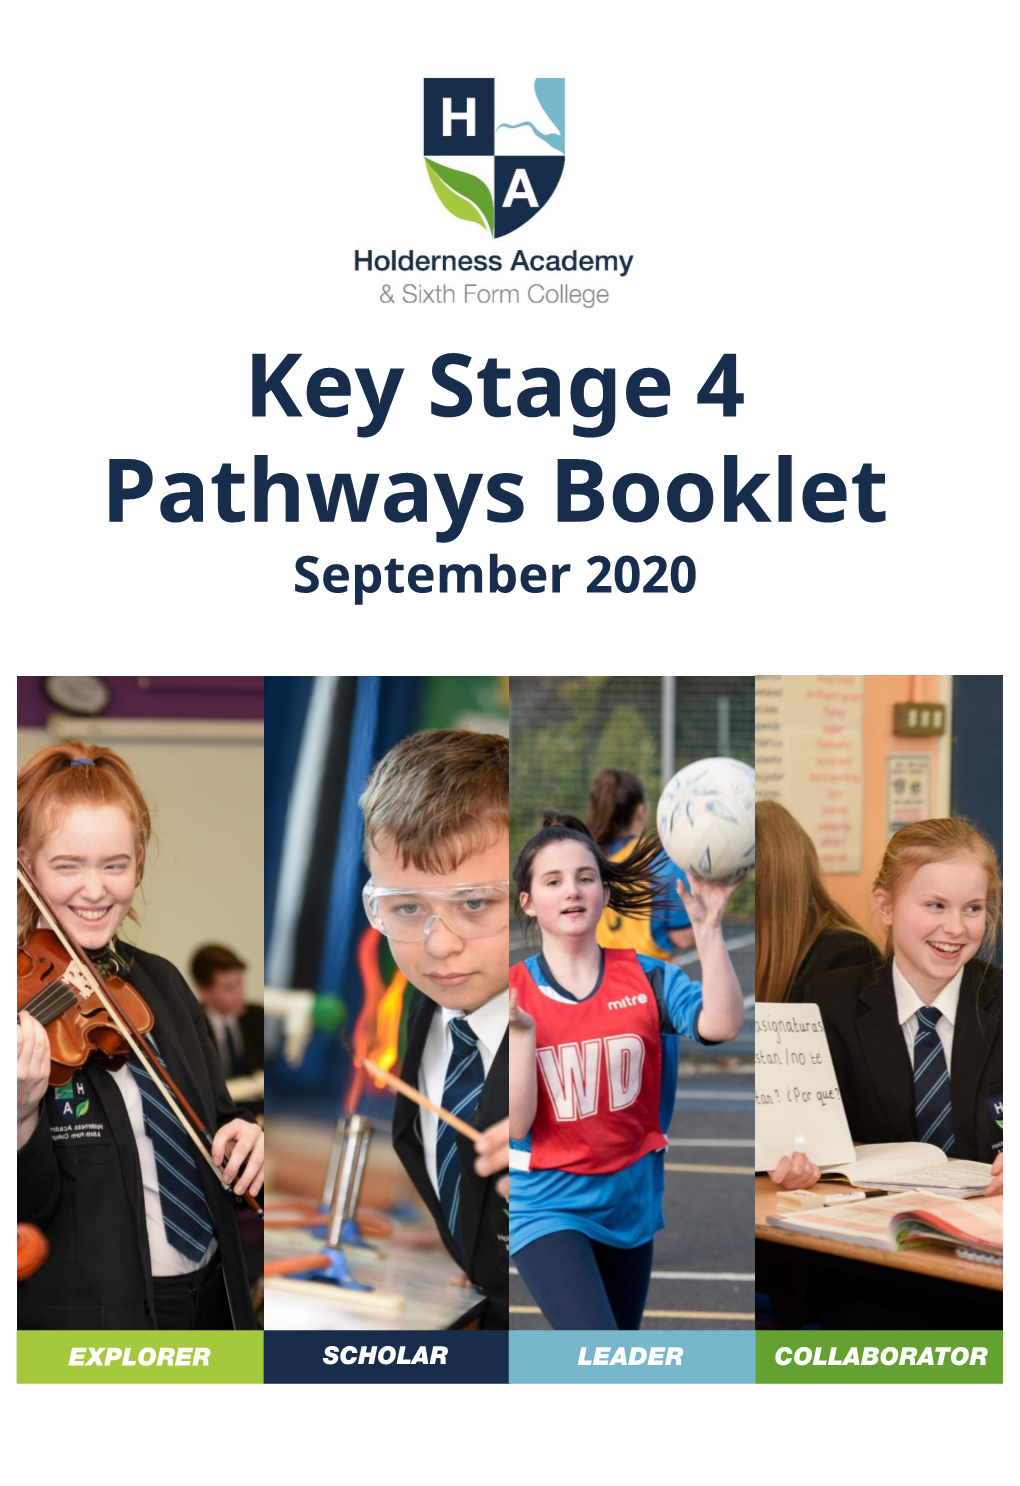 Key Stage 4 Pathways Booklet September 2020